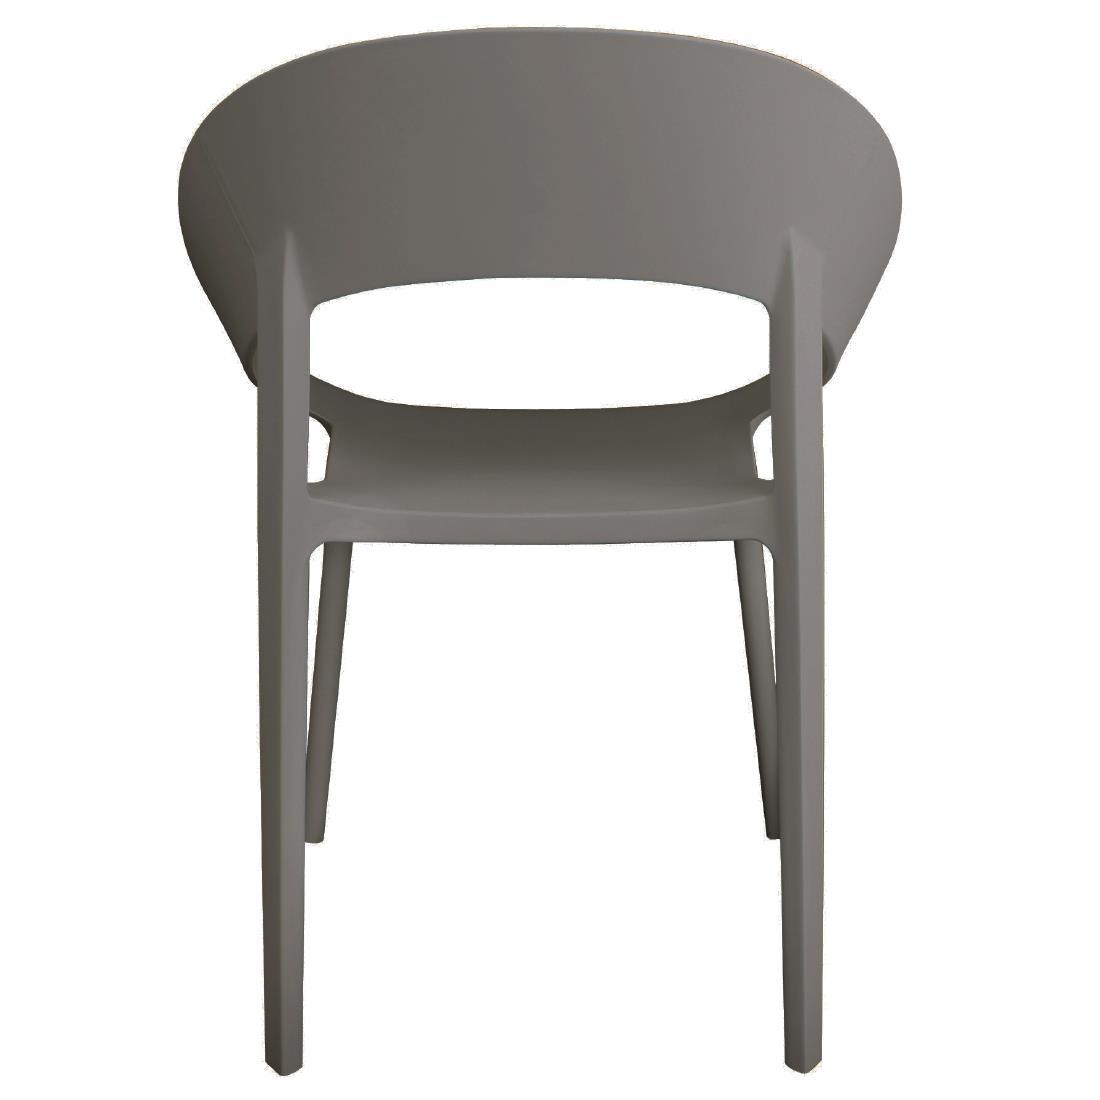 GR339 - Bolero PP Wraparound Chair Coffee (Pack 4) - GR339  - 3